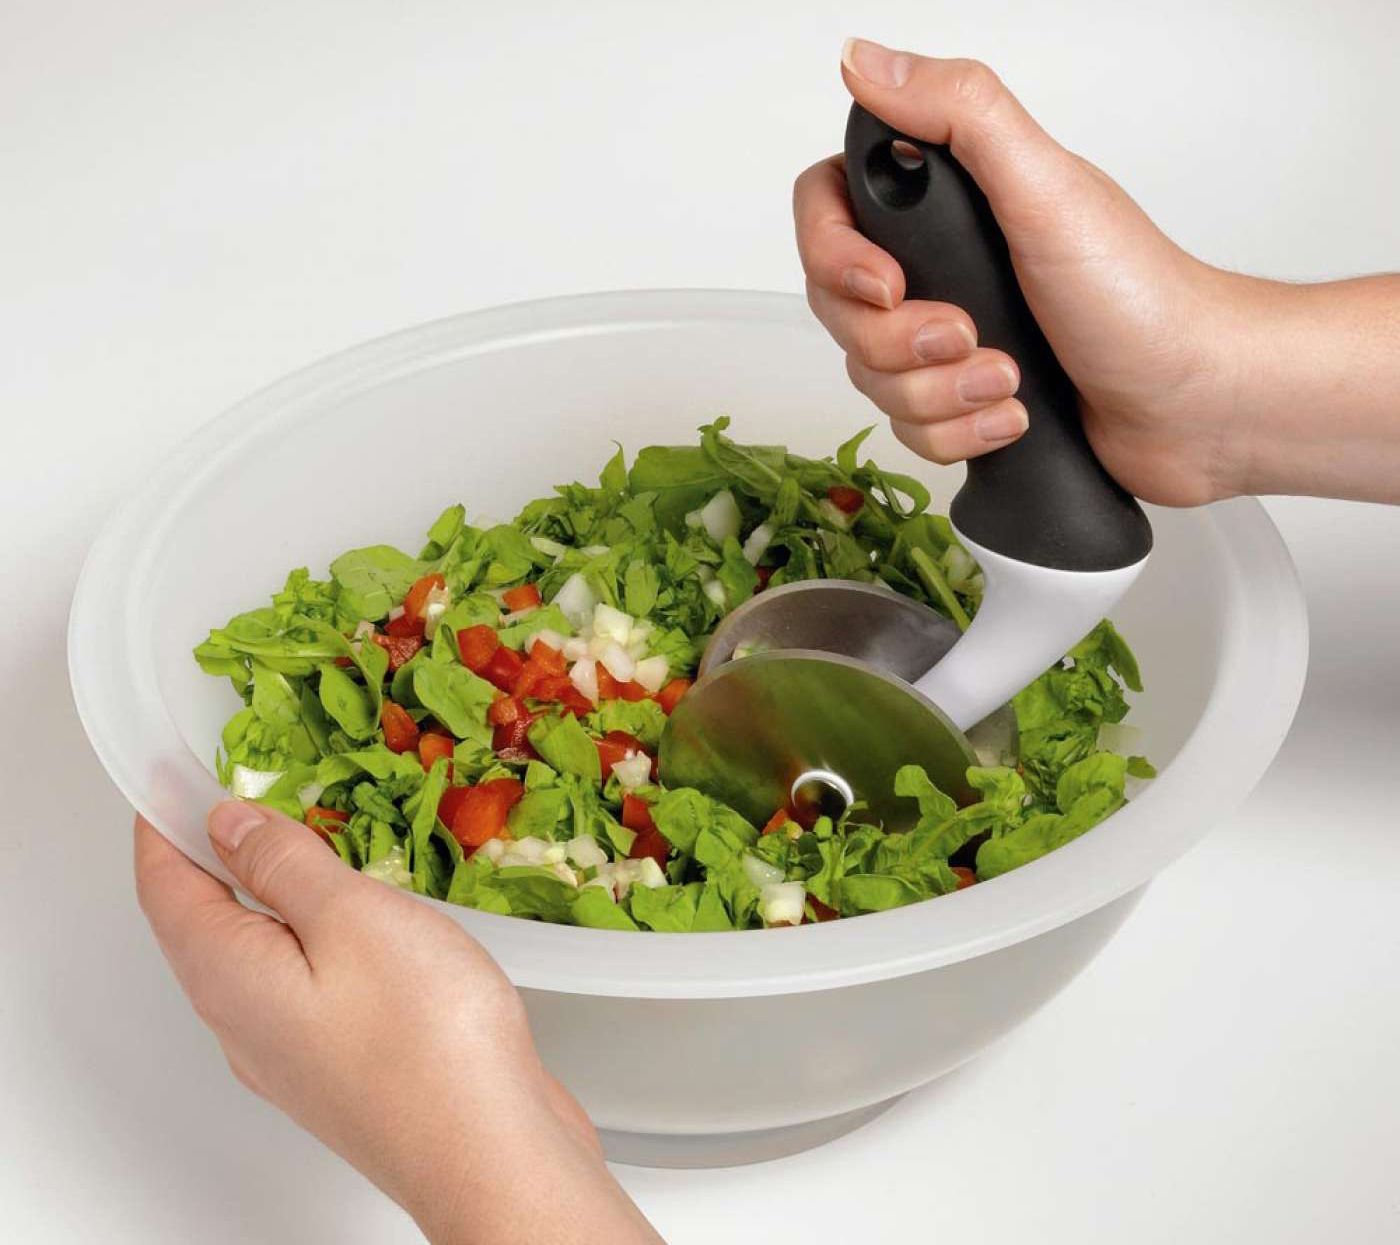 Salad Chopper, Stainless Steel Salad Cutter Bowl with Chef Grade Mezzaluna  Salad Chopper 